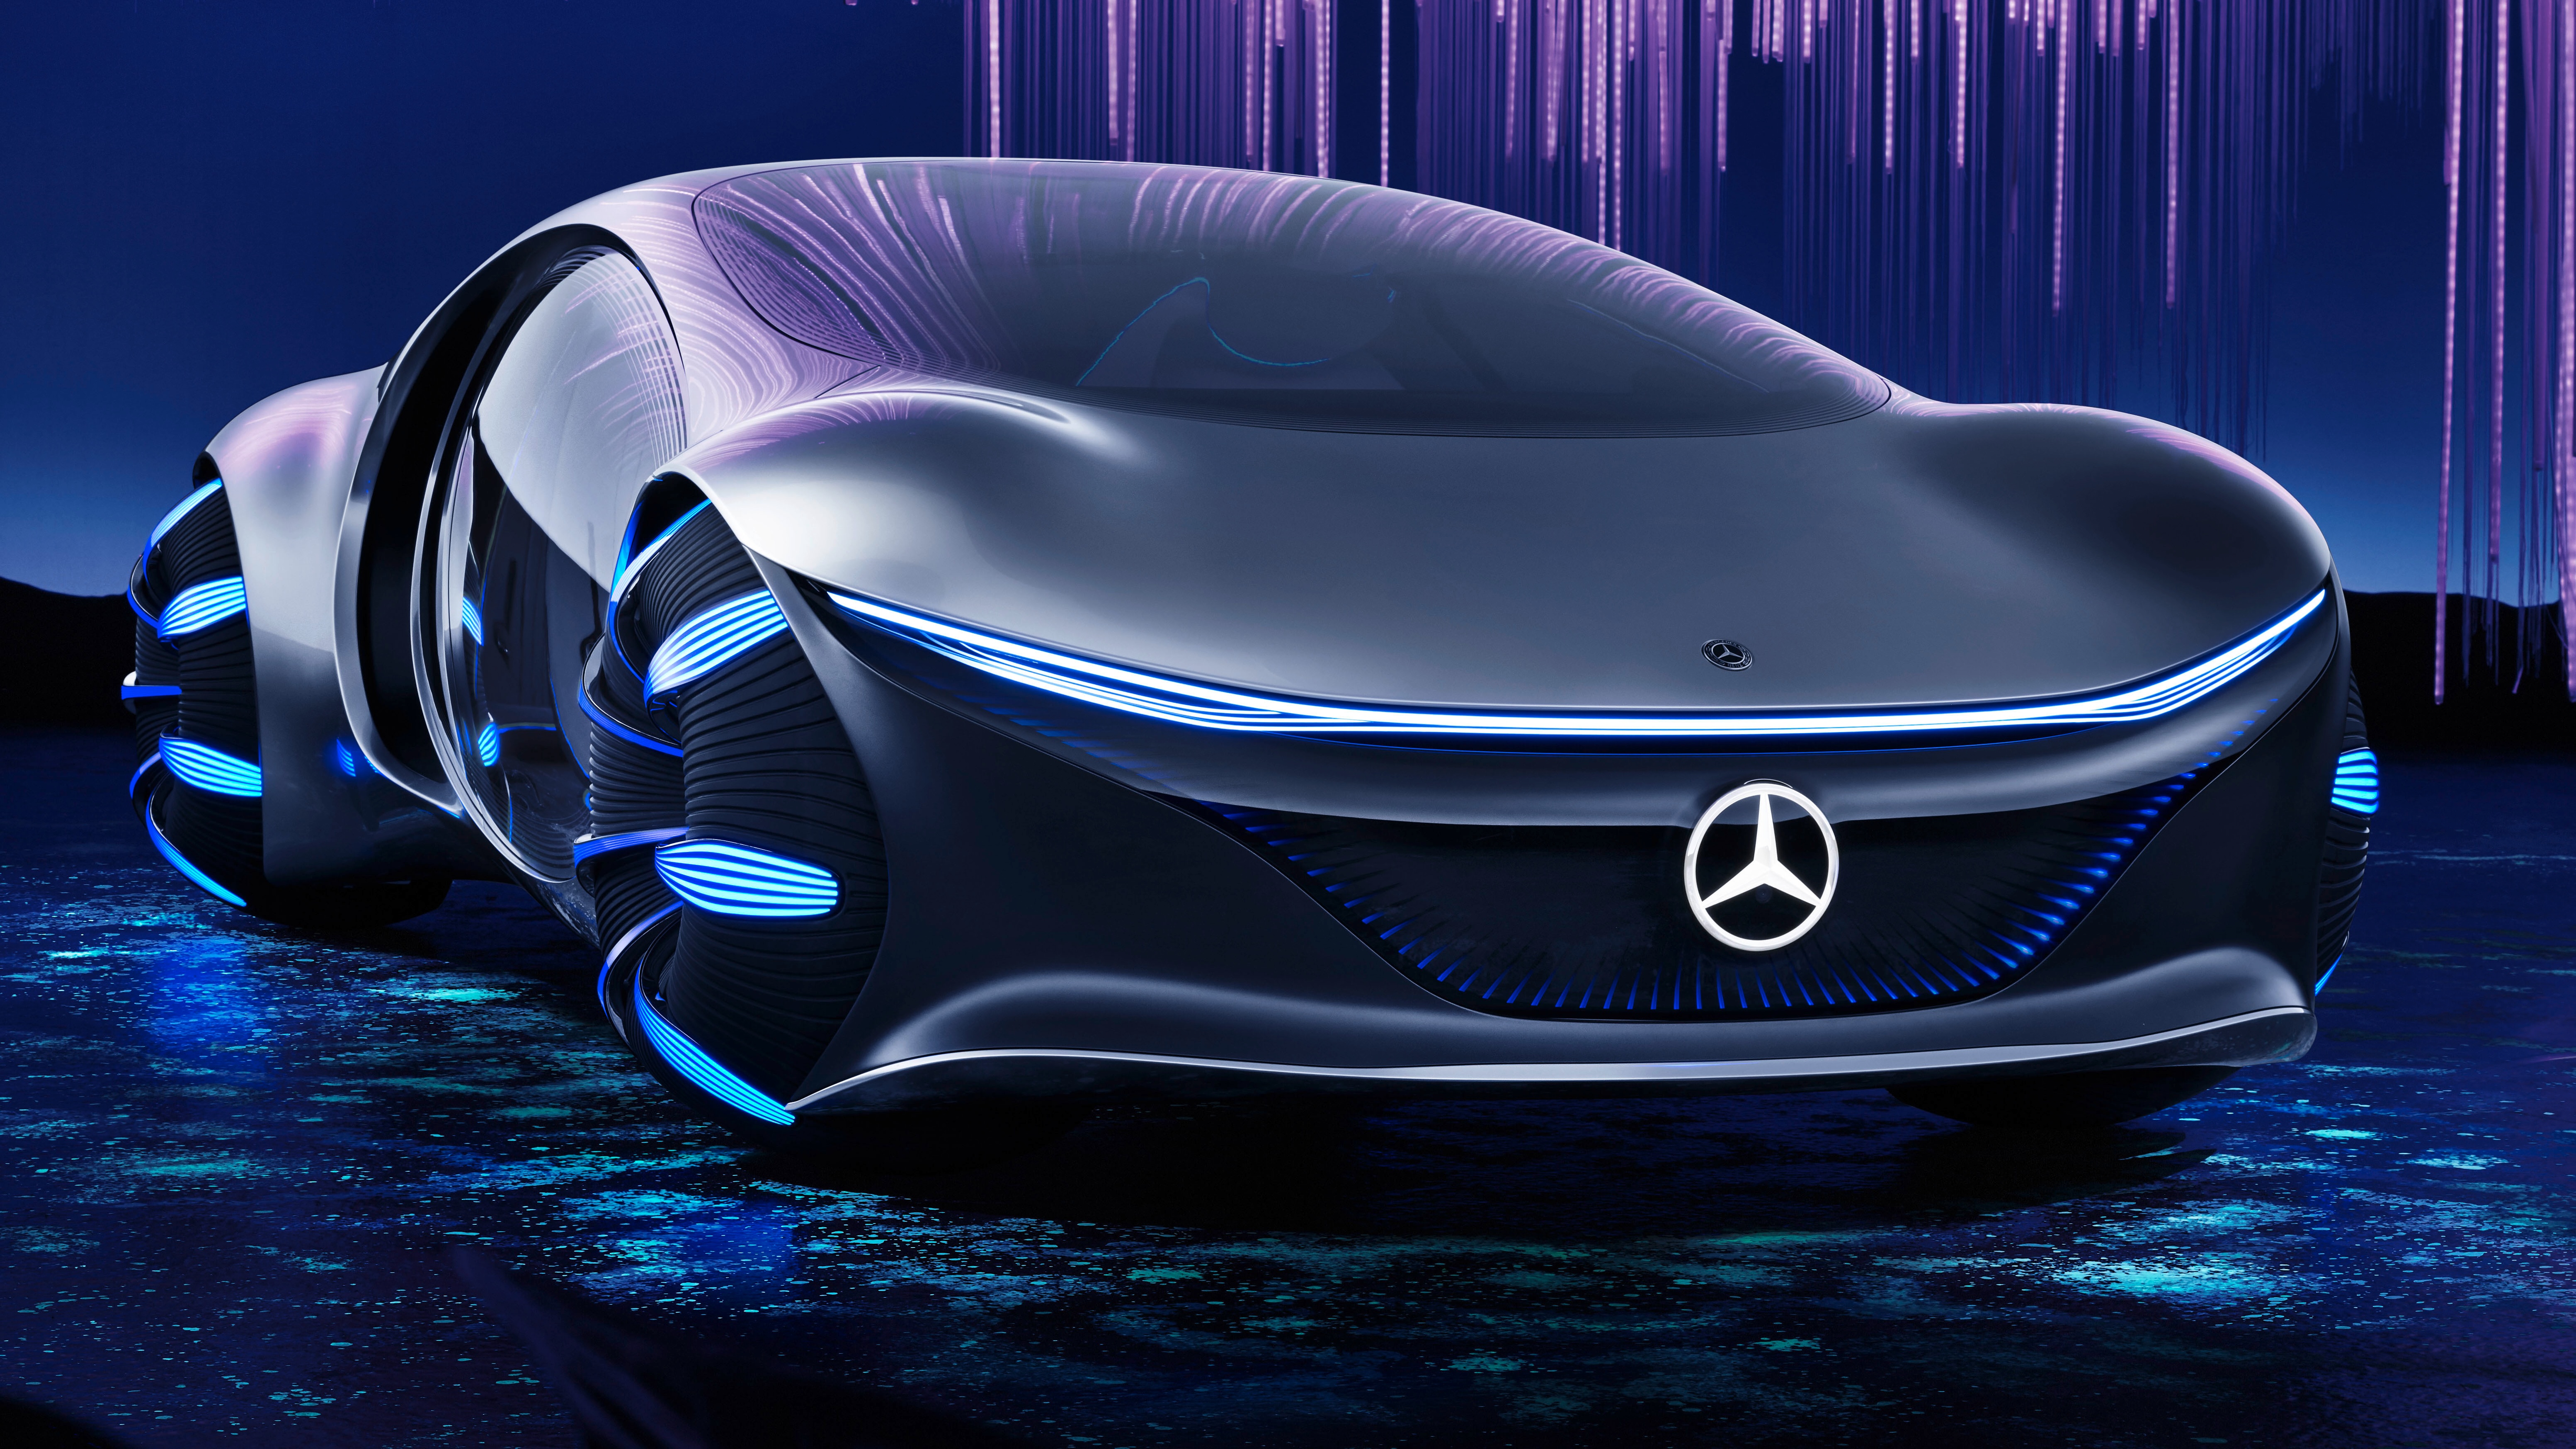 News - Mercedes-Benz Vision AVTR Revealed At CES 2020